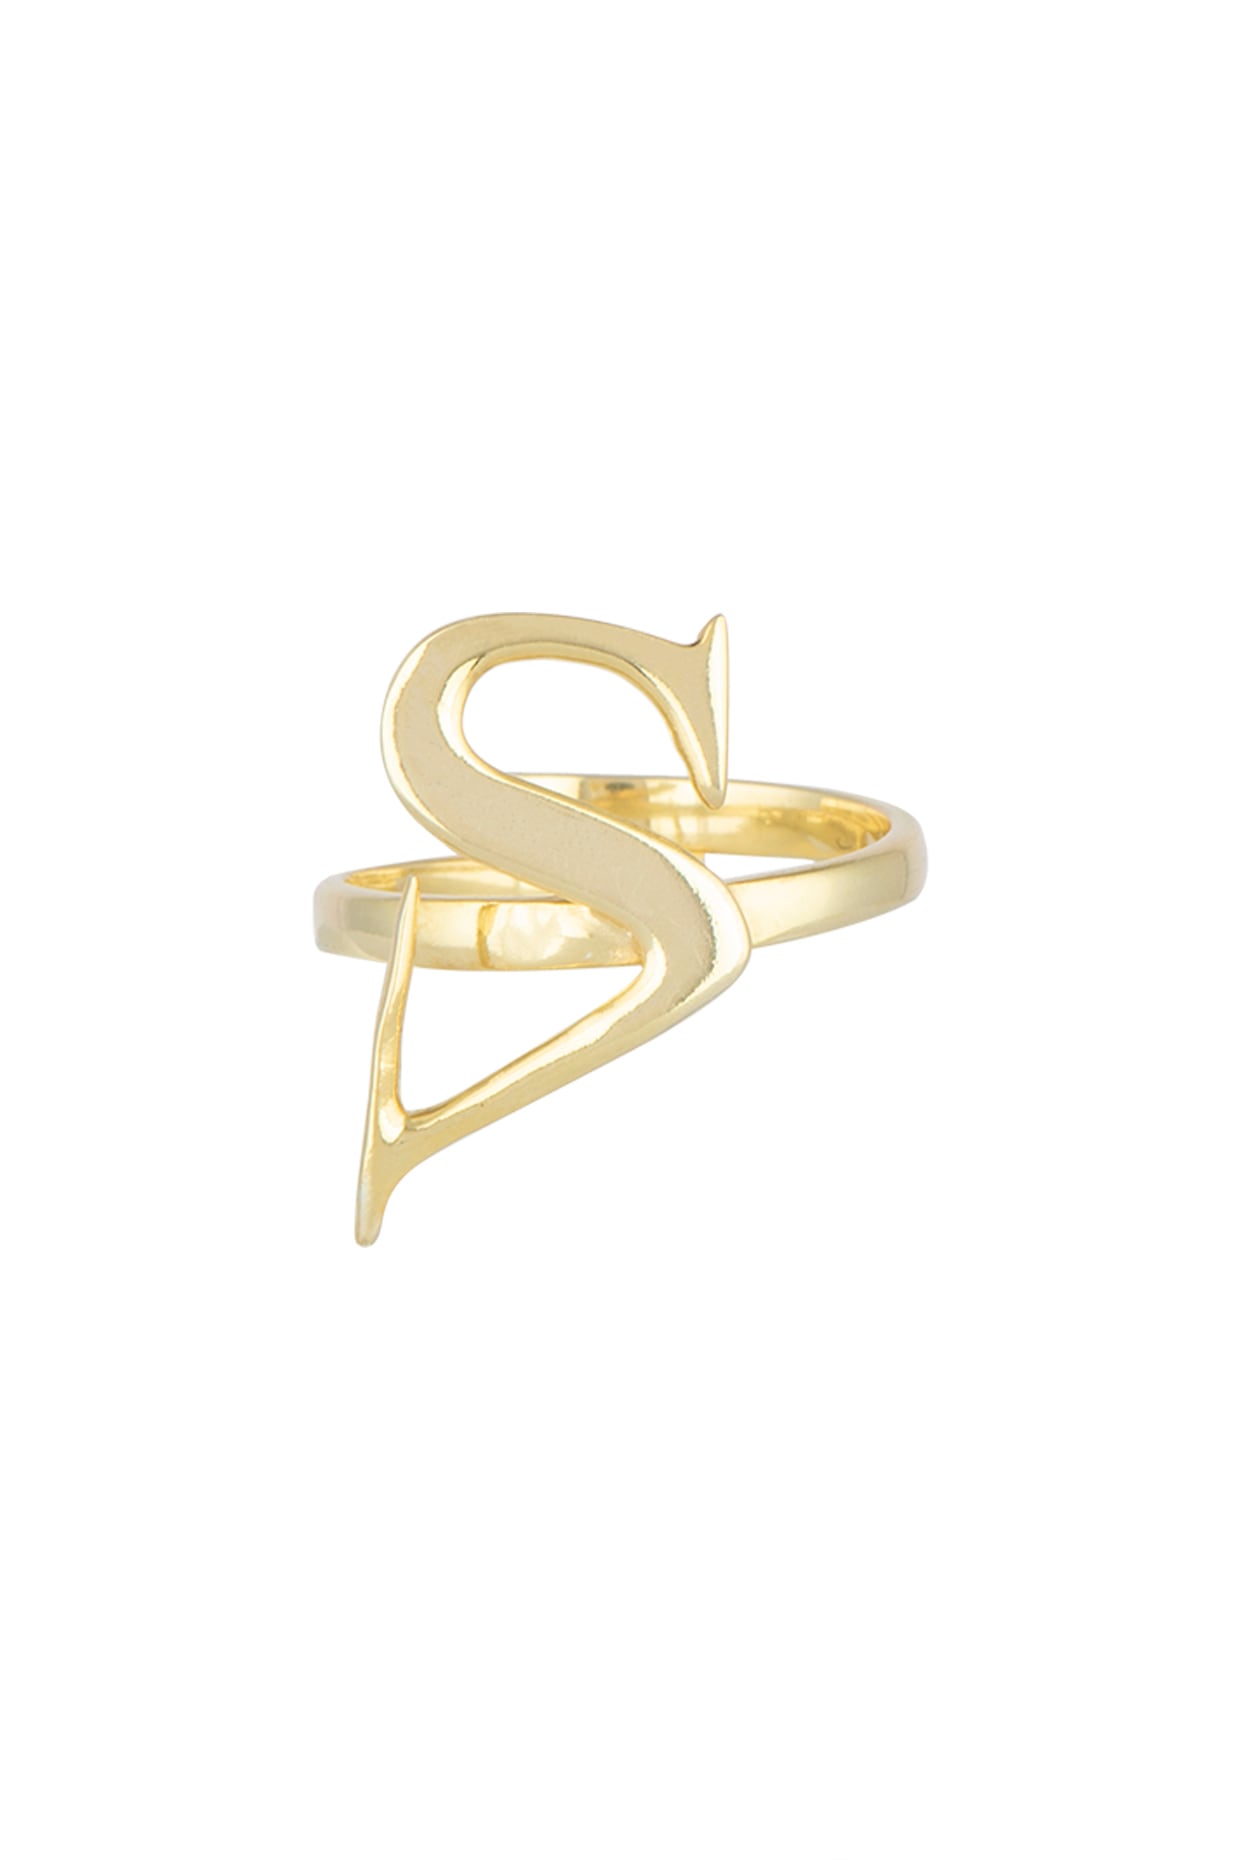 Diamond Double Heart Promise Ring | Jewelry by Johan - Jewelry by Johan